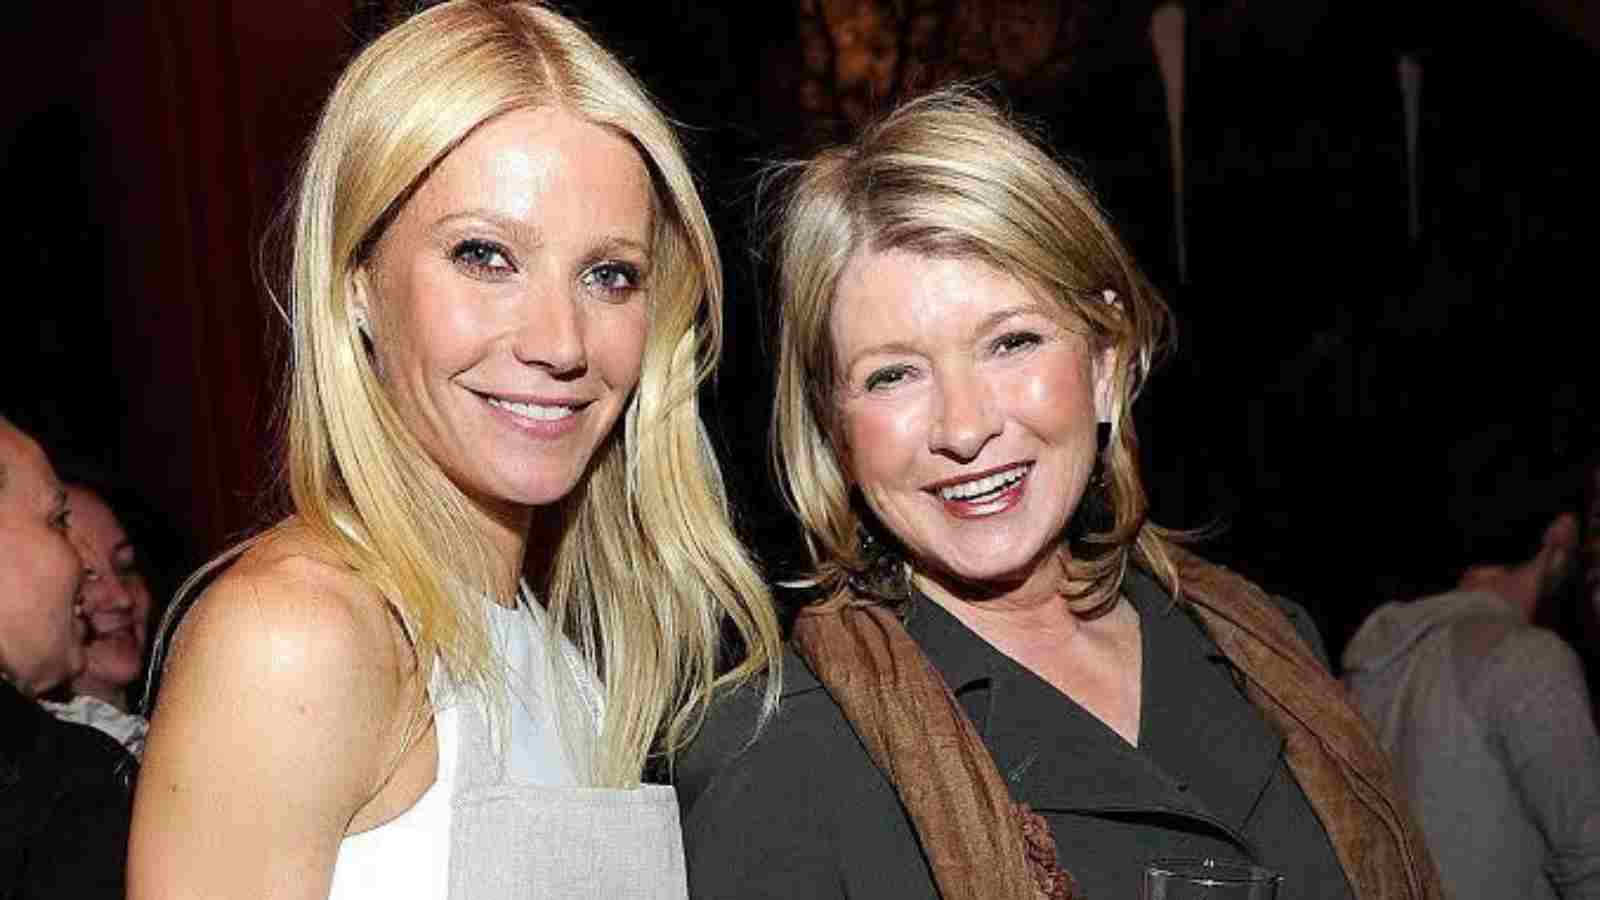 Gwyneth Paltrow and Martha Stewart took digs at each other in subtle ways